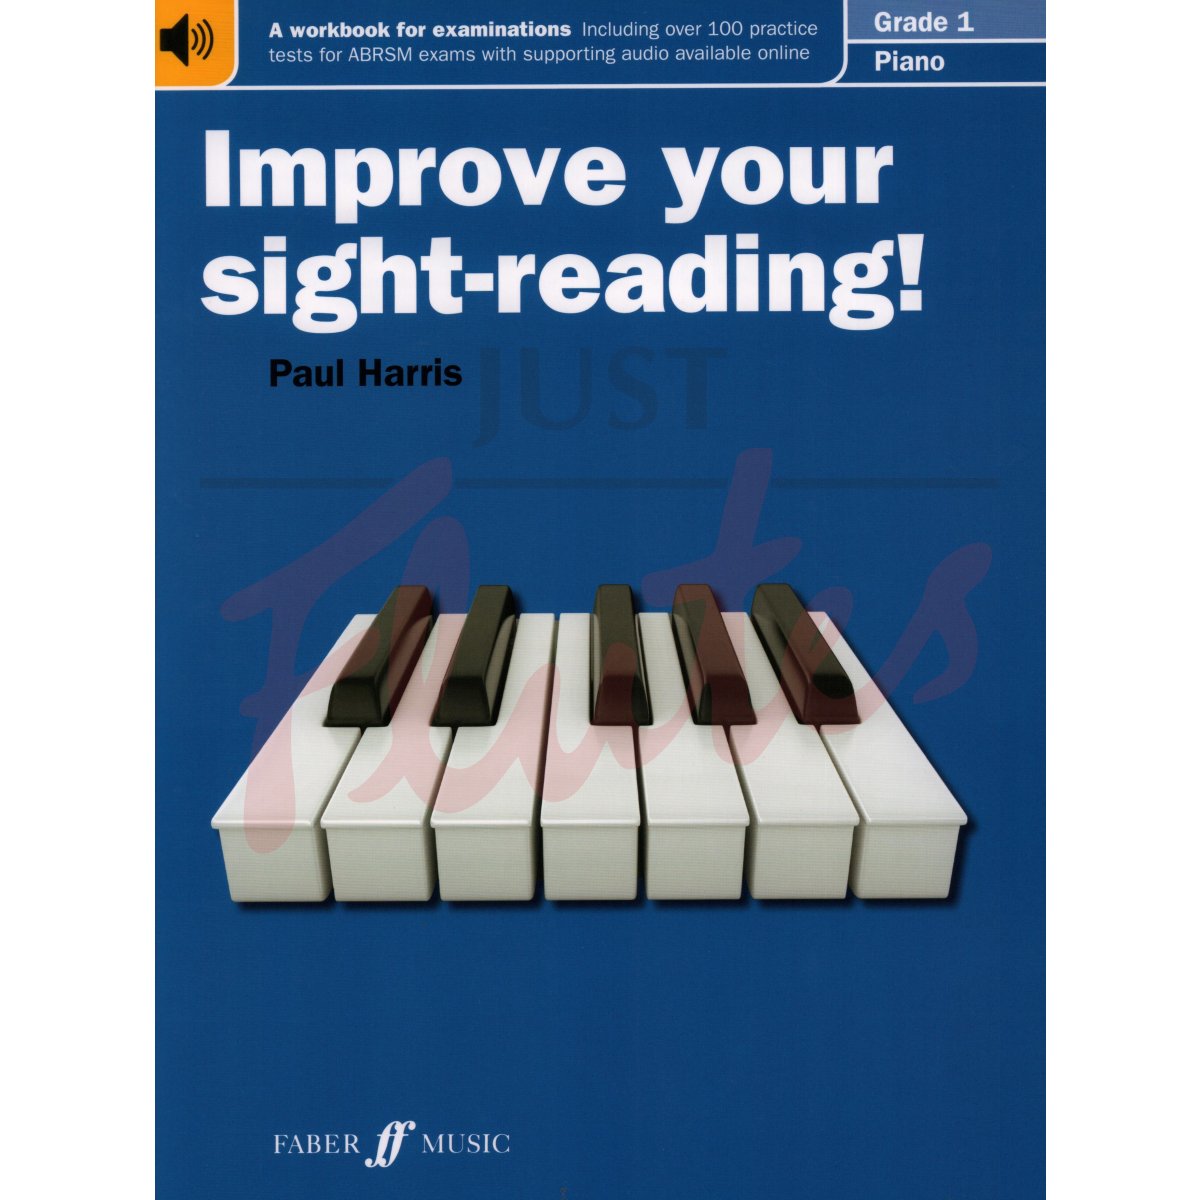 Improve Your Sight-Reading! [Piano] Grade 1